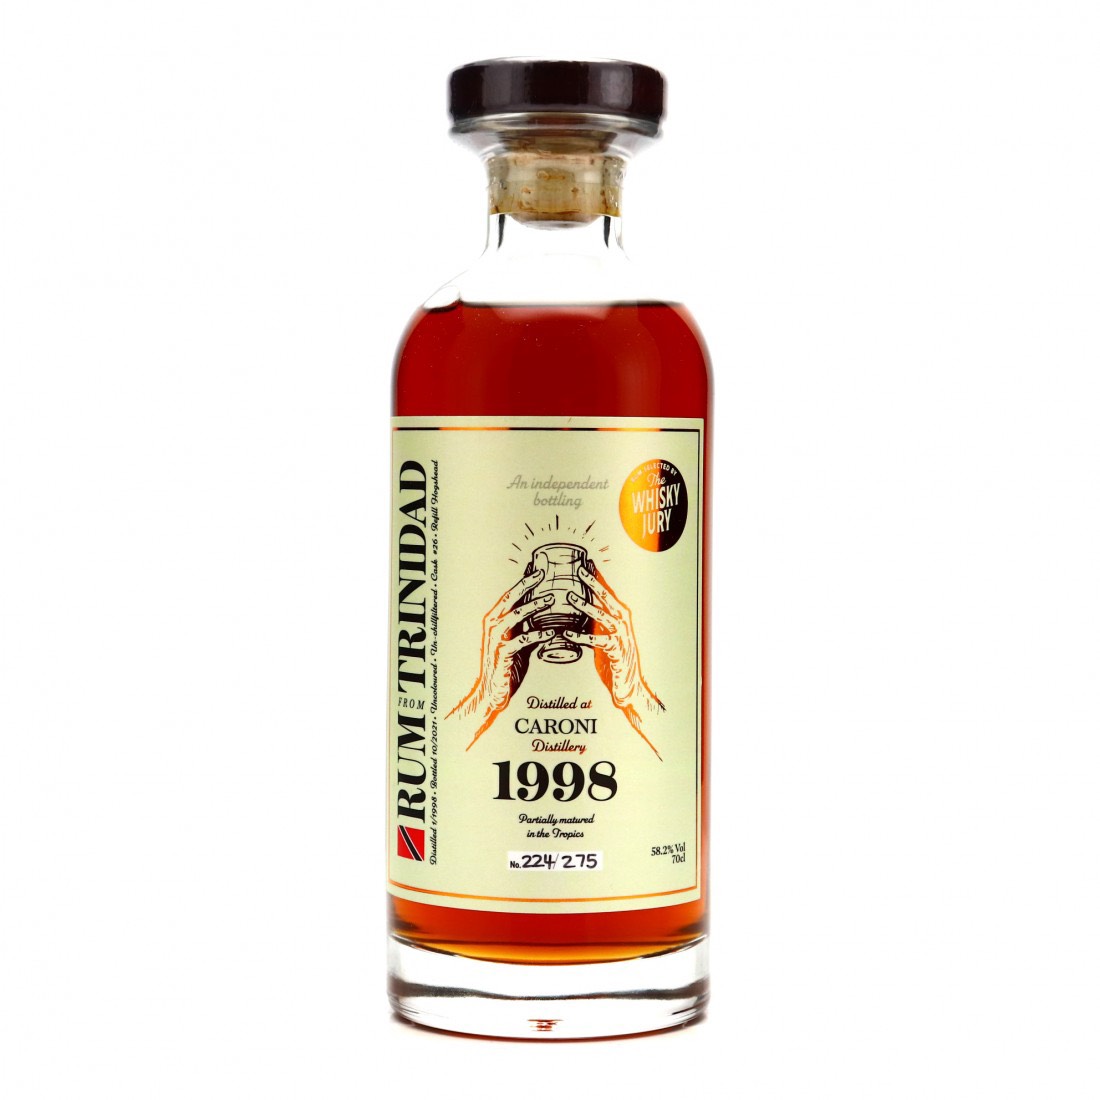 Bottle image of Rum Trinidad